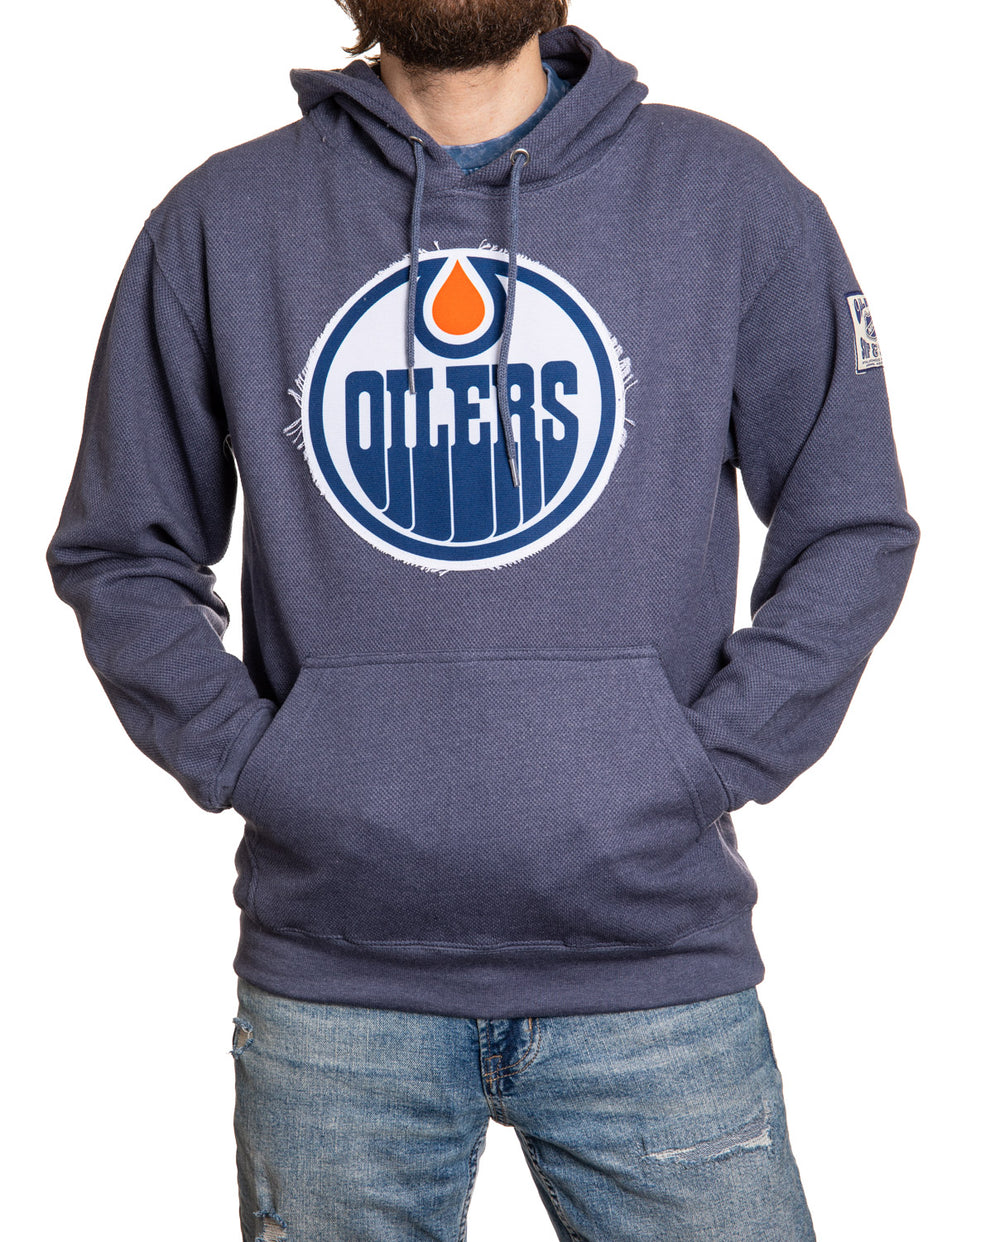 Edmonton Oilers Flannel Foxes Skyline shirt, hoodie, sweater, long sleeve  and tank top